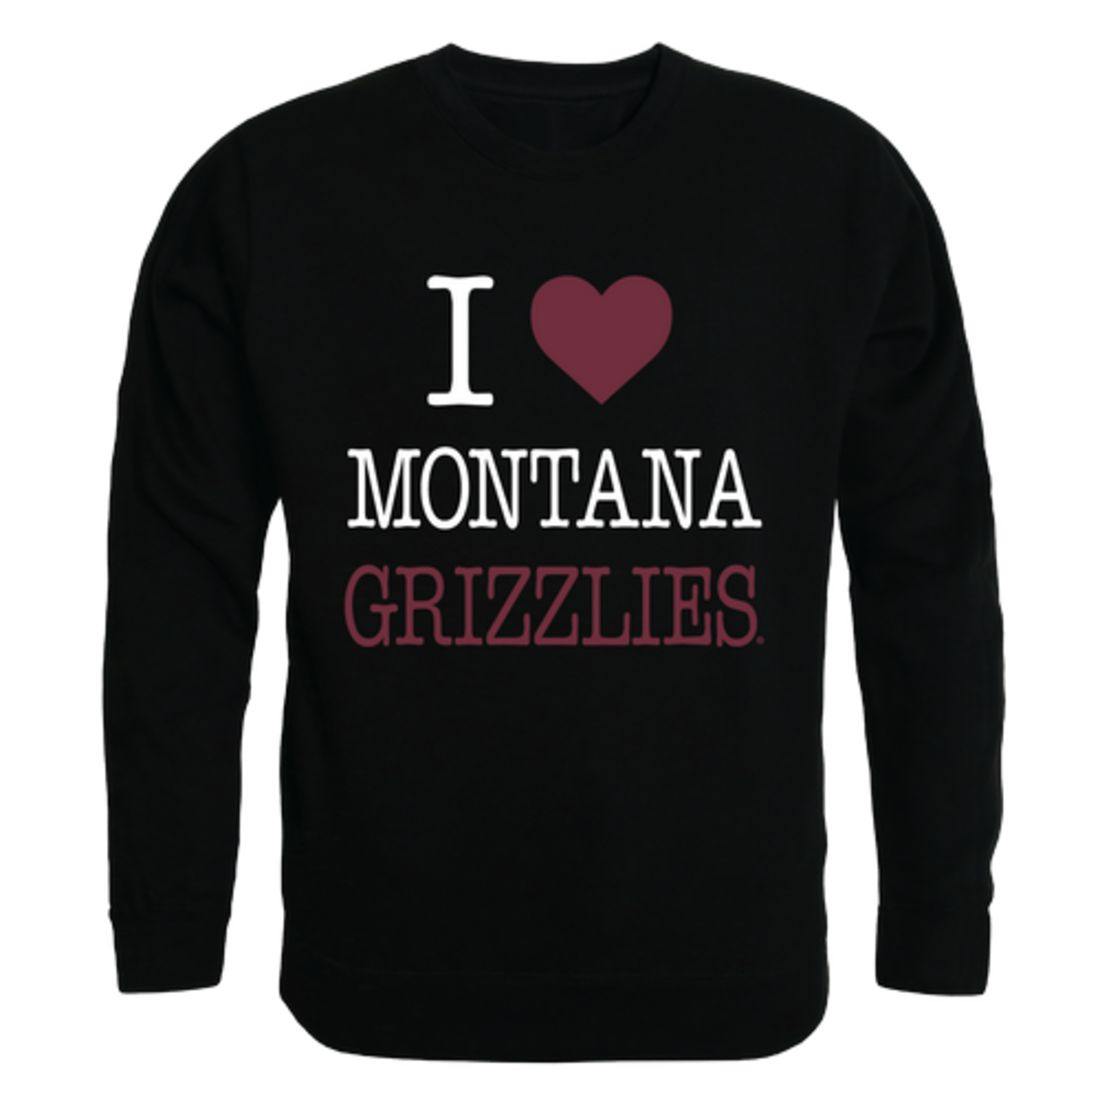 I Love UM University of Montana Grizzlies Crewneck Pullover Sweatshirt Sweater-Campus-Wardrobe